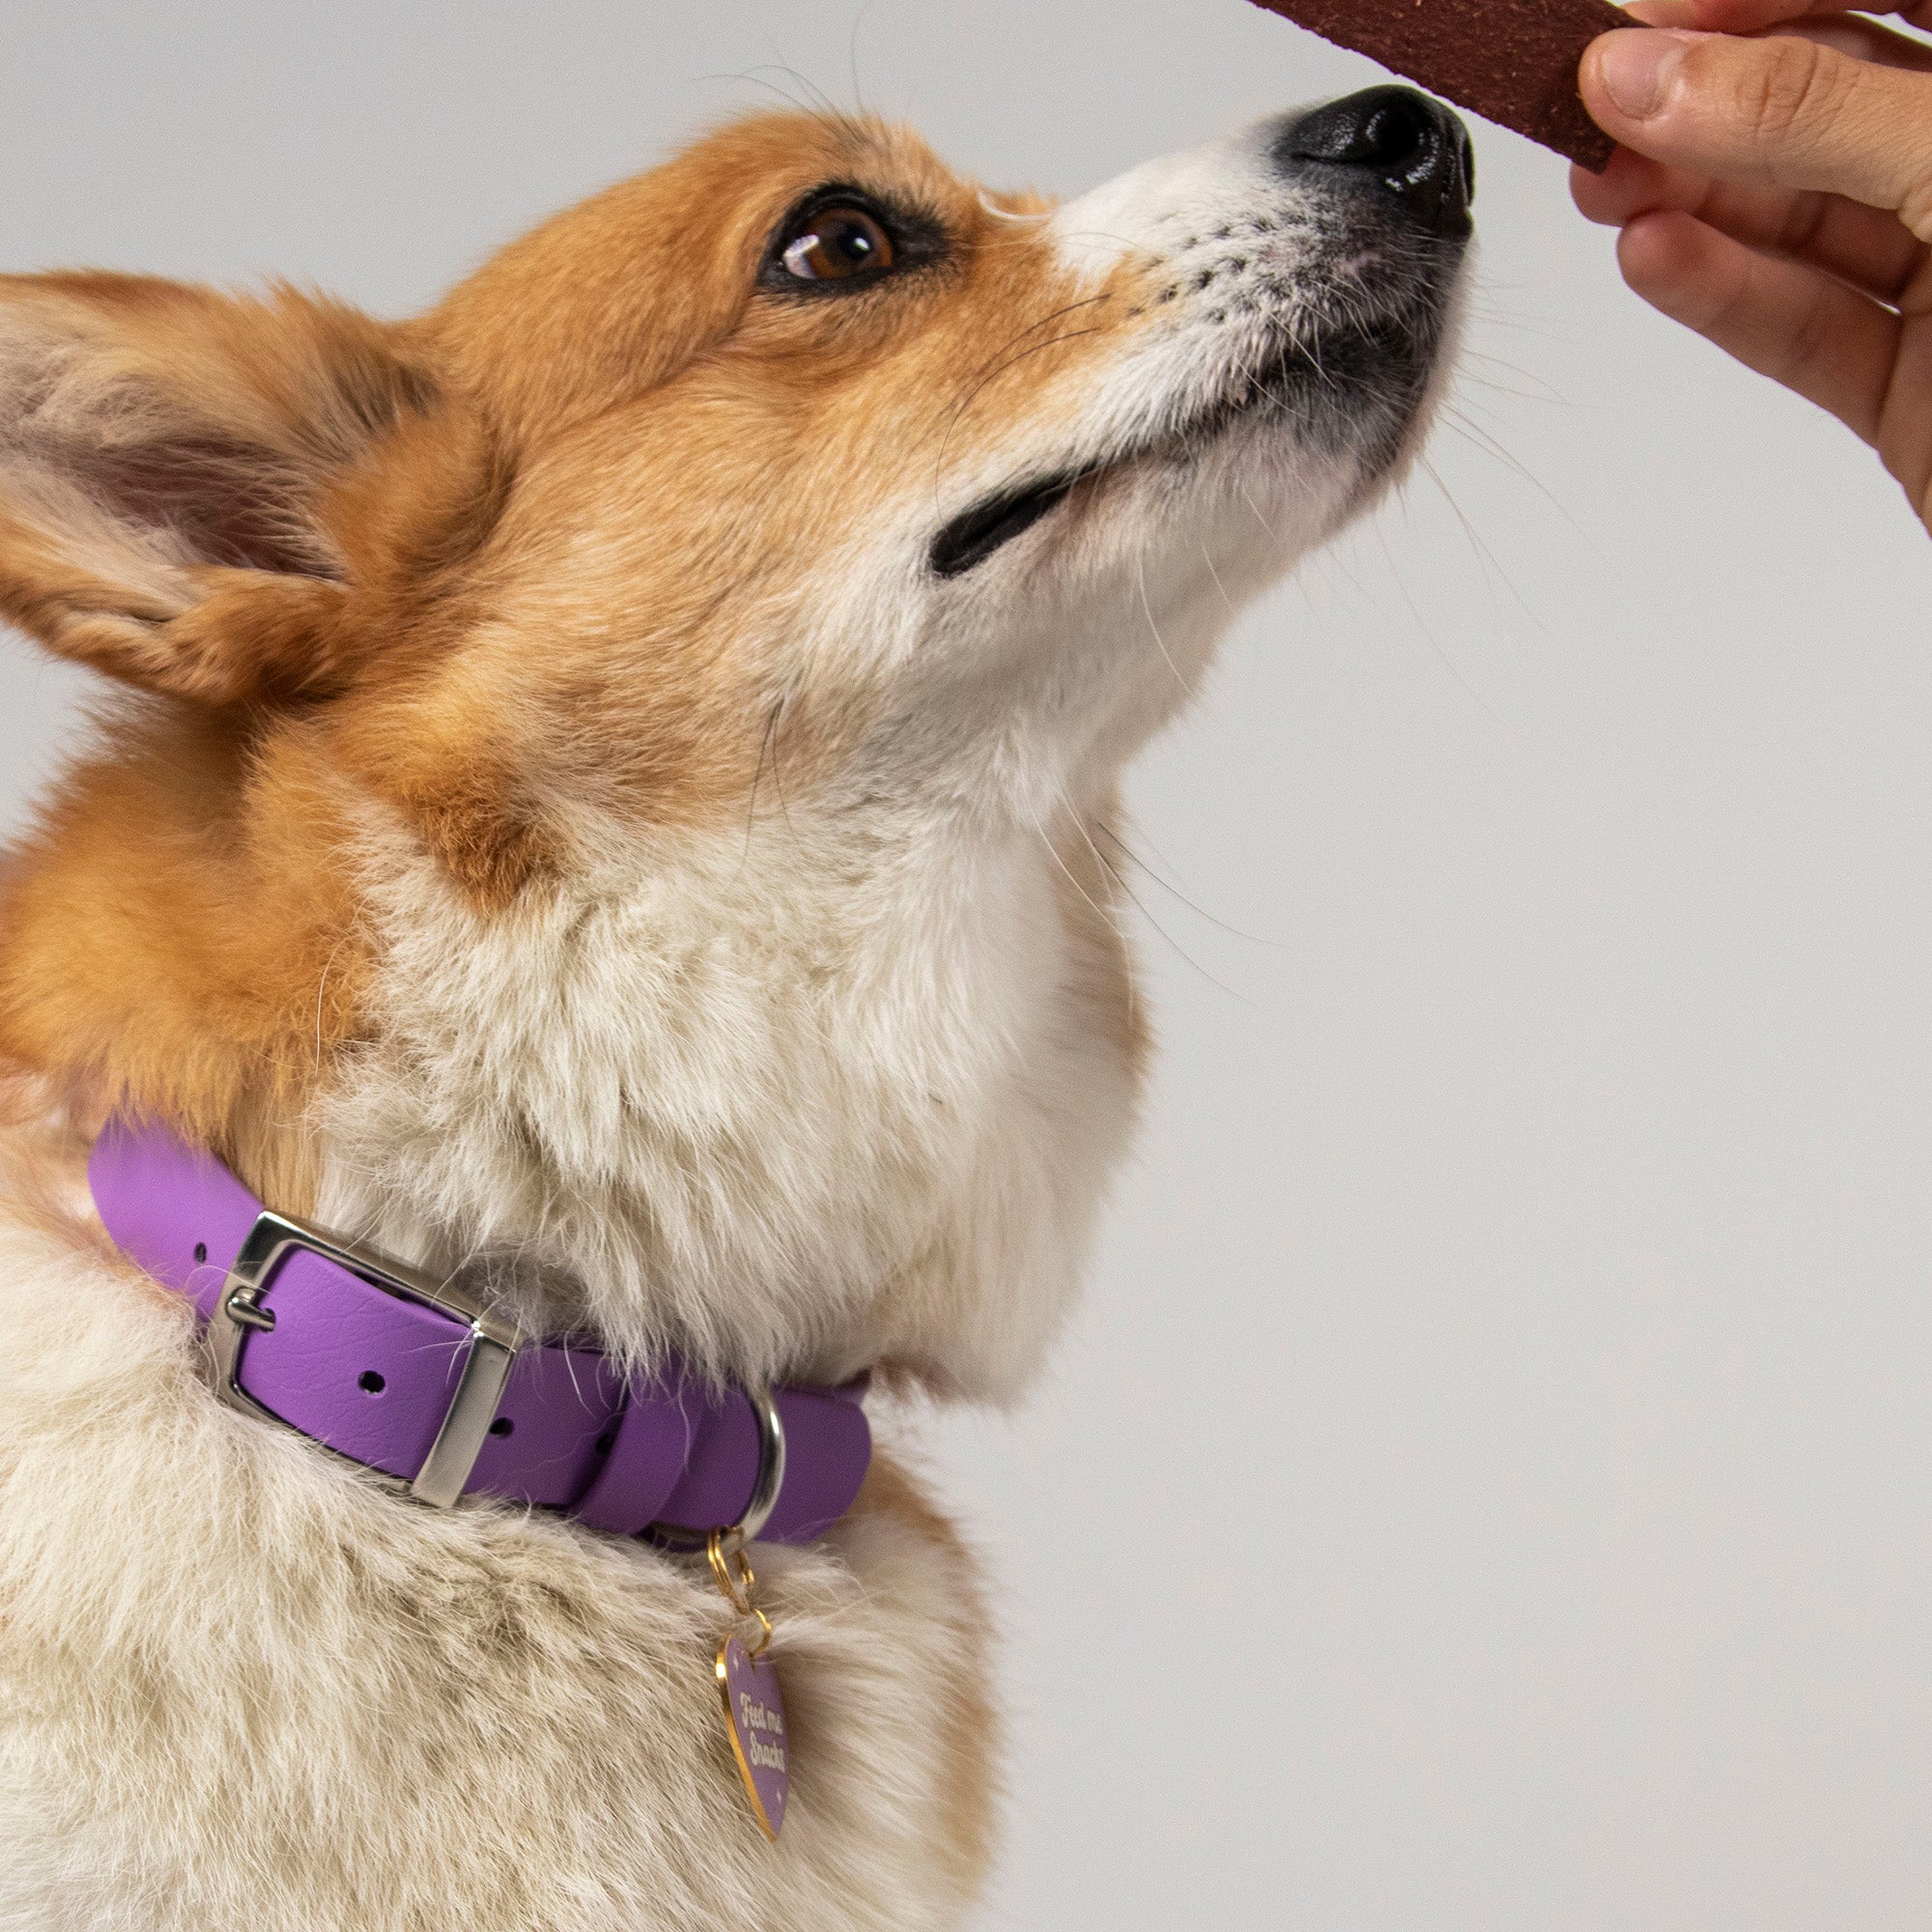 Waterproof Dog Collar in Purple